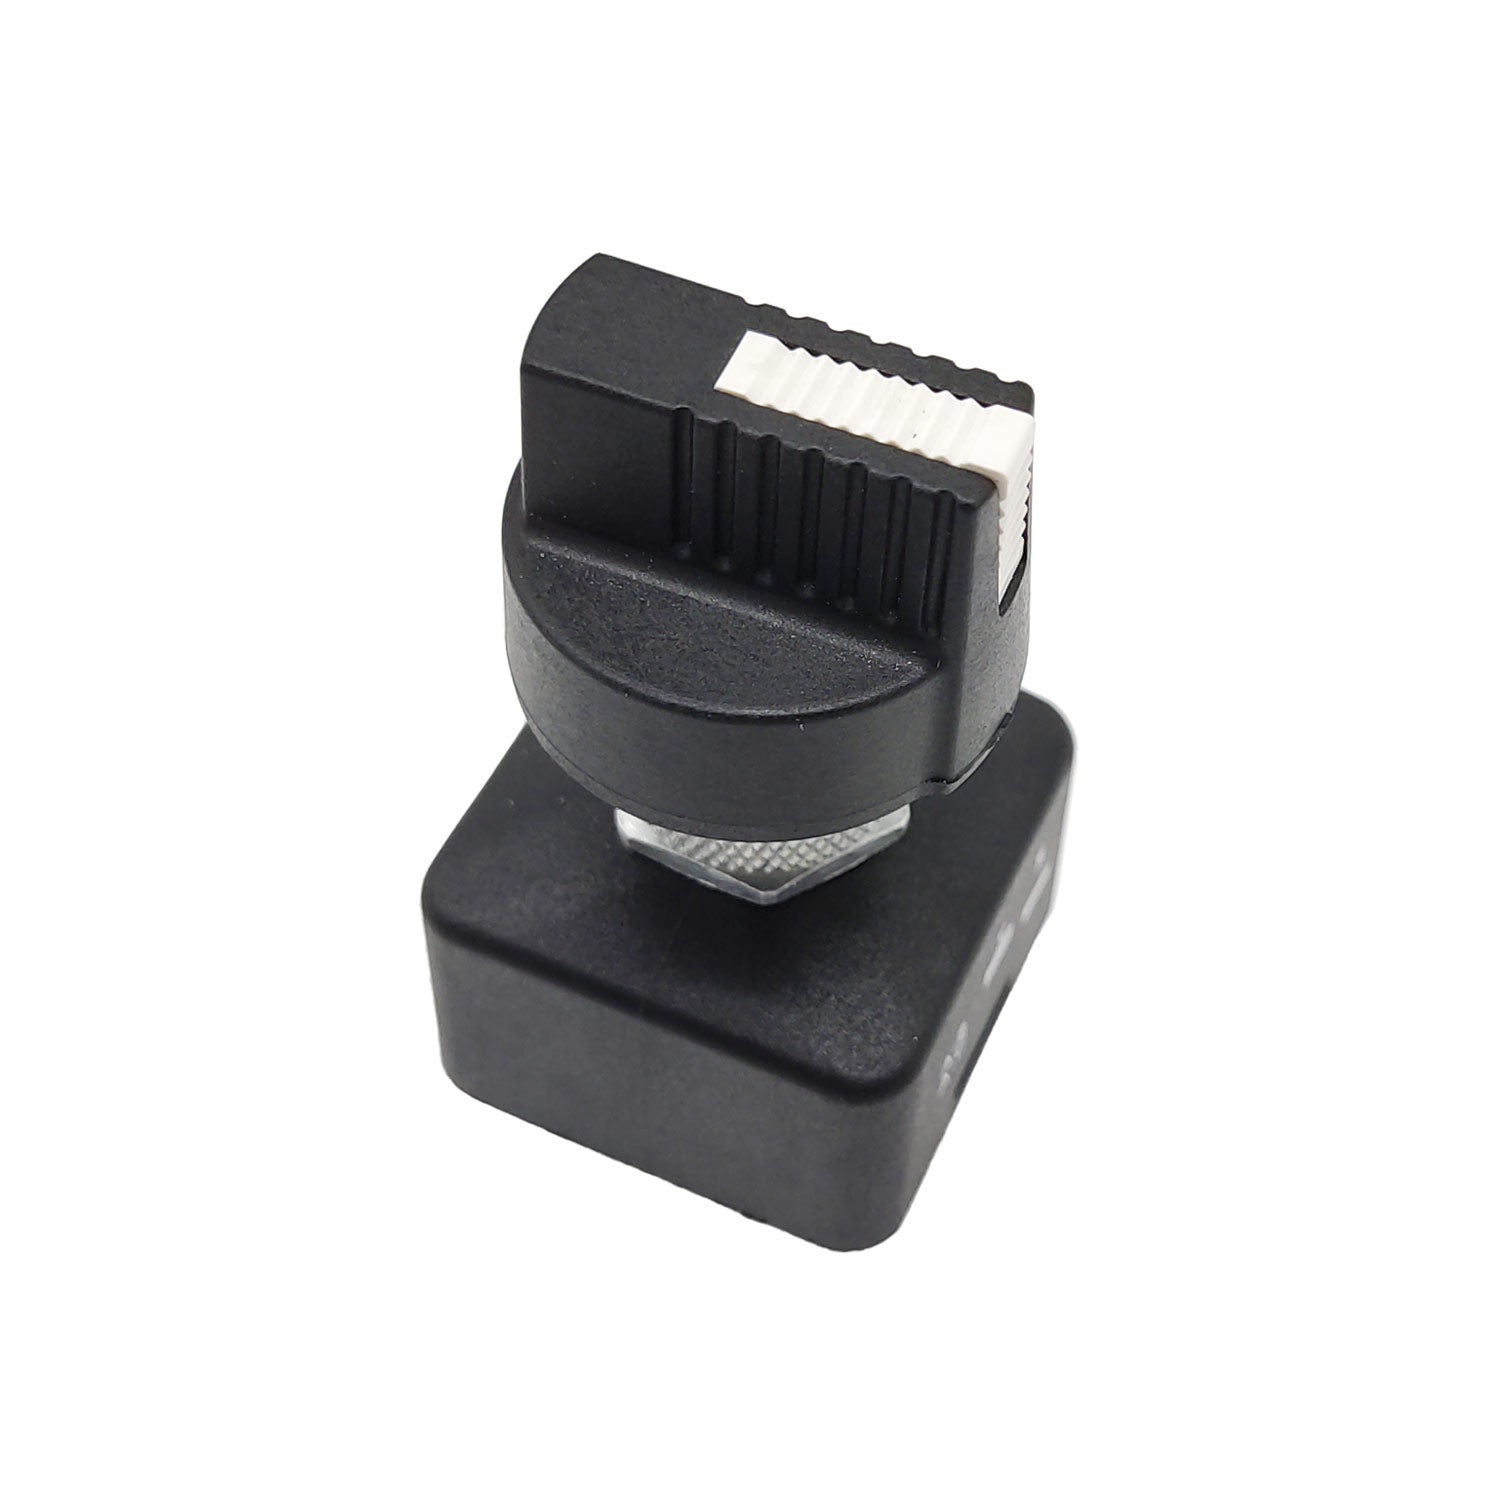 Çevirmeli Anahtar Rotary Switch 3 Pin (On-On / 1-2) Referans OE: 6EB 905 341-002, 50770525151, 70525151